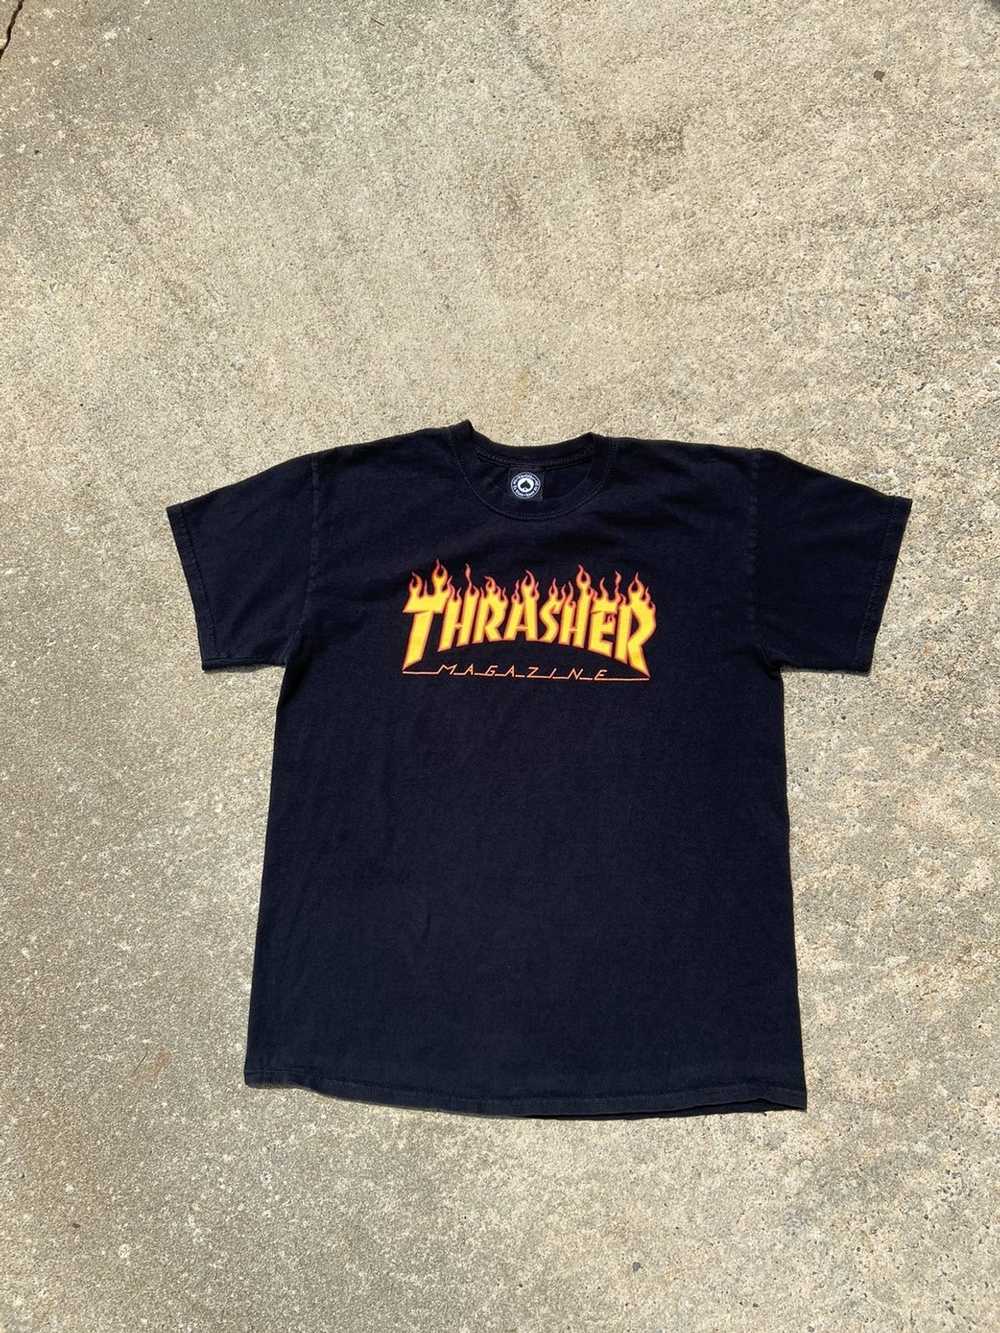 Thrasher Thrasher Magazine Classic T-Shirt - image 4